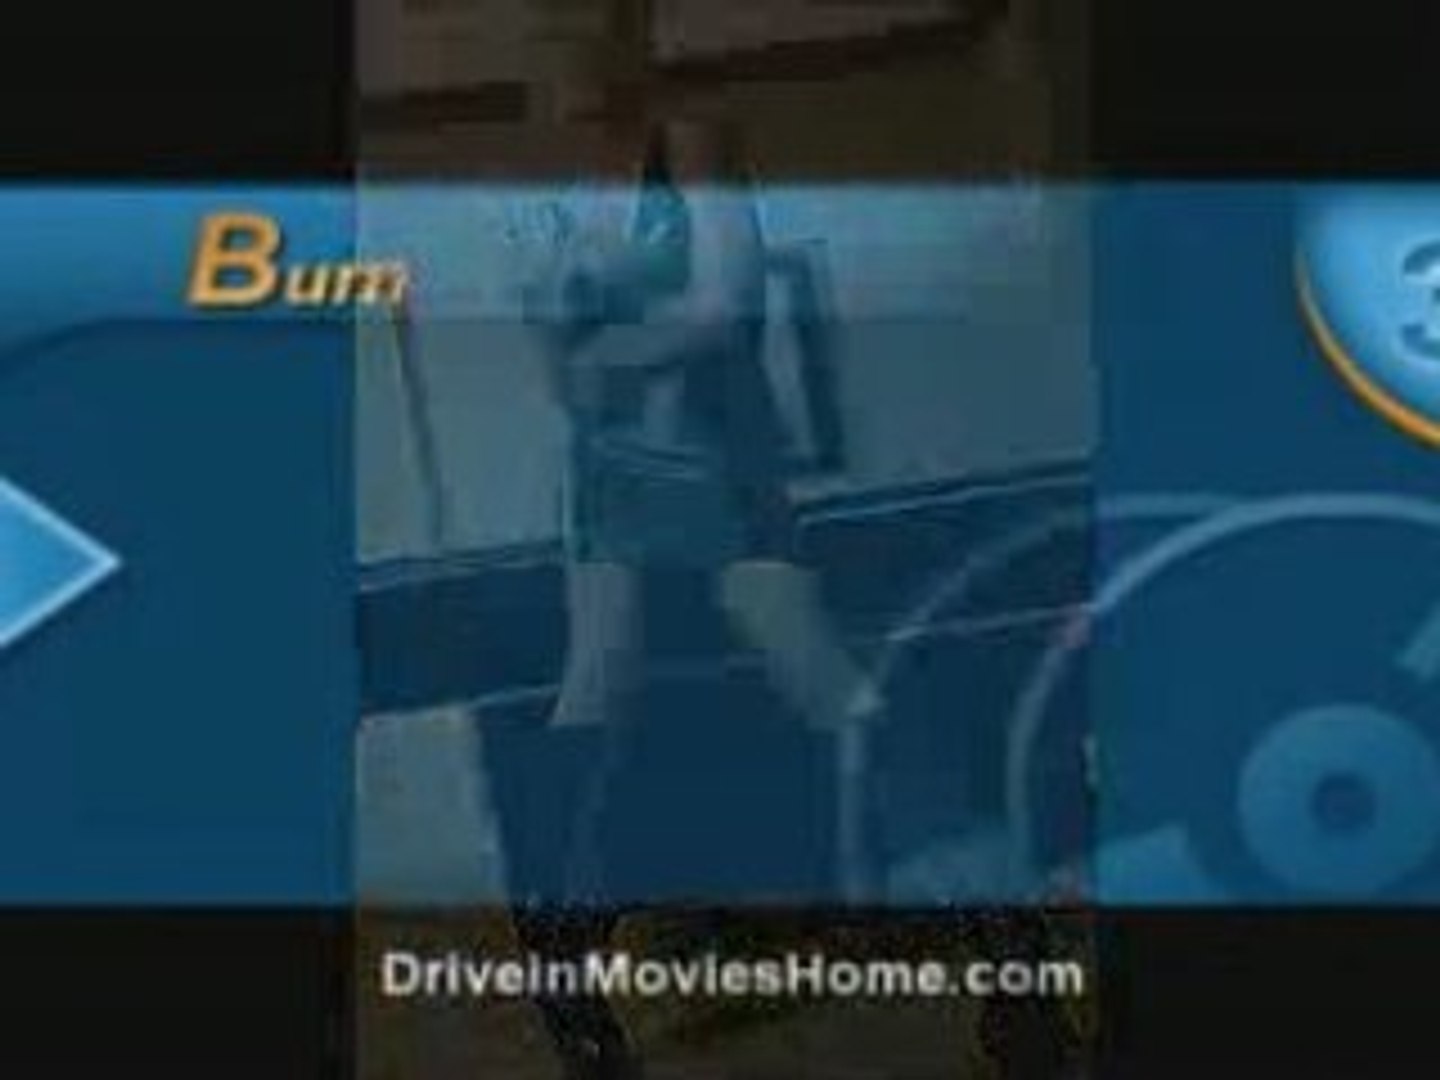 Drivin movies download movies home movies movie